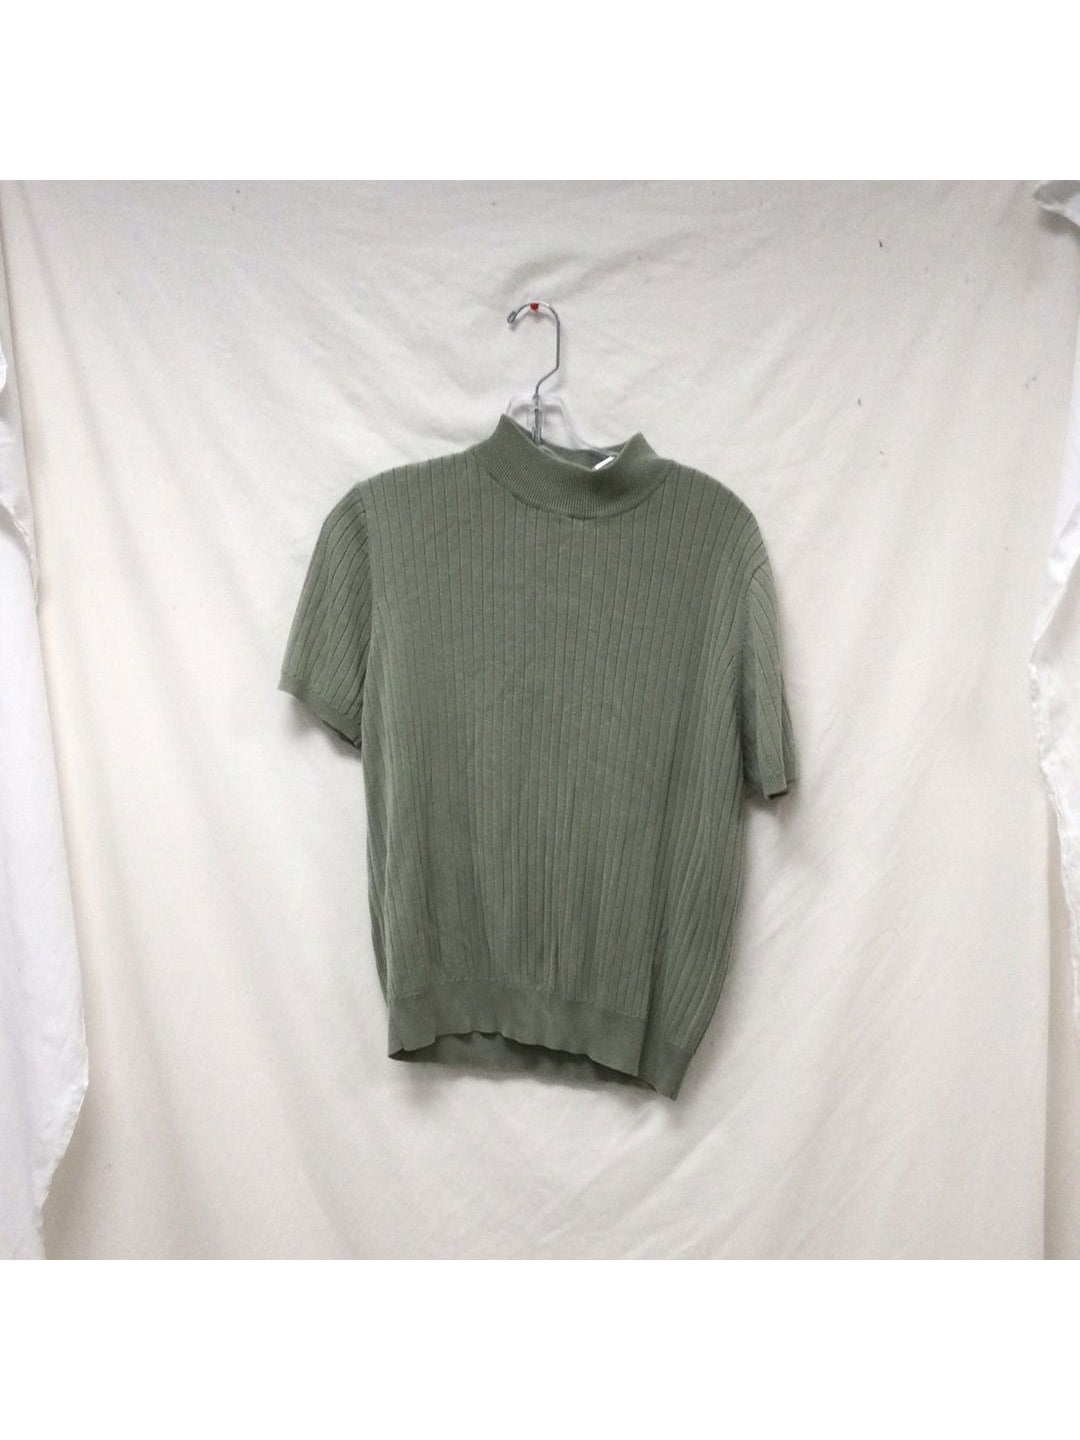 Croft & Barrow Women's The Classic Polo  light green Short Sleeve Shirt - The Kennedy Collective Thrift - 